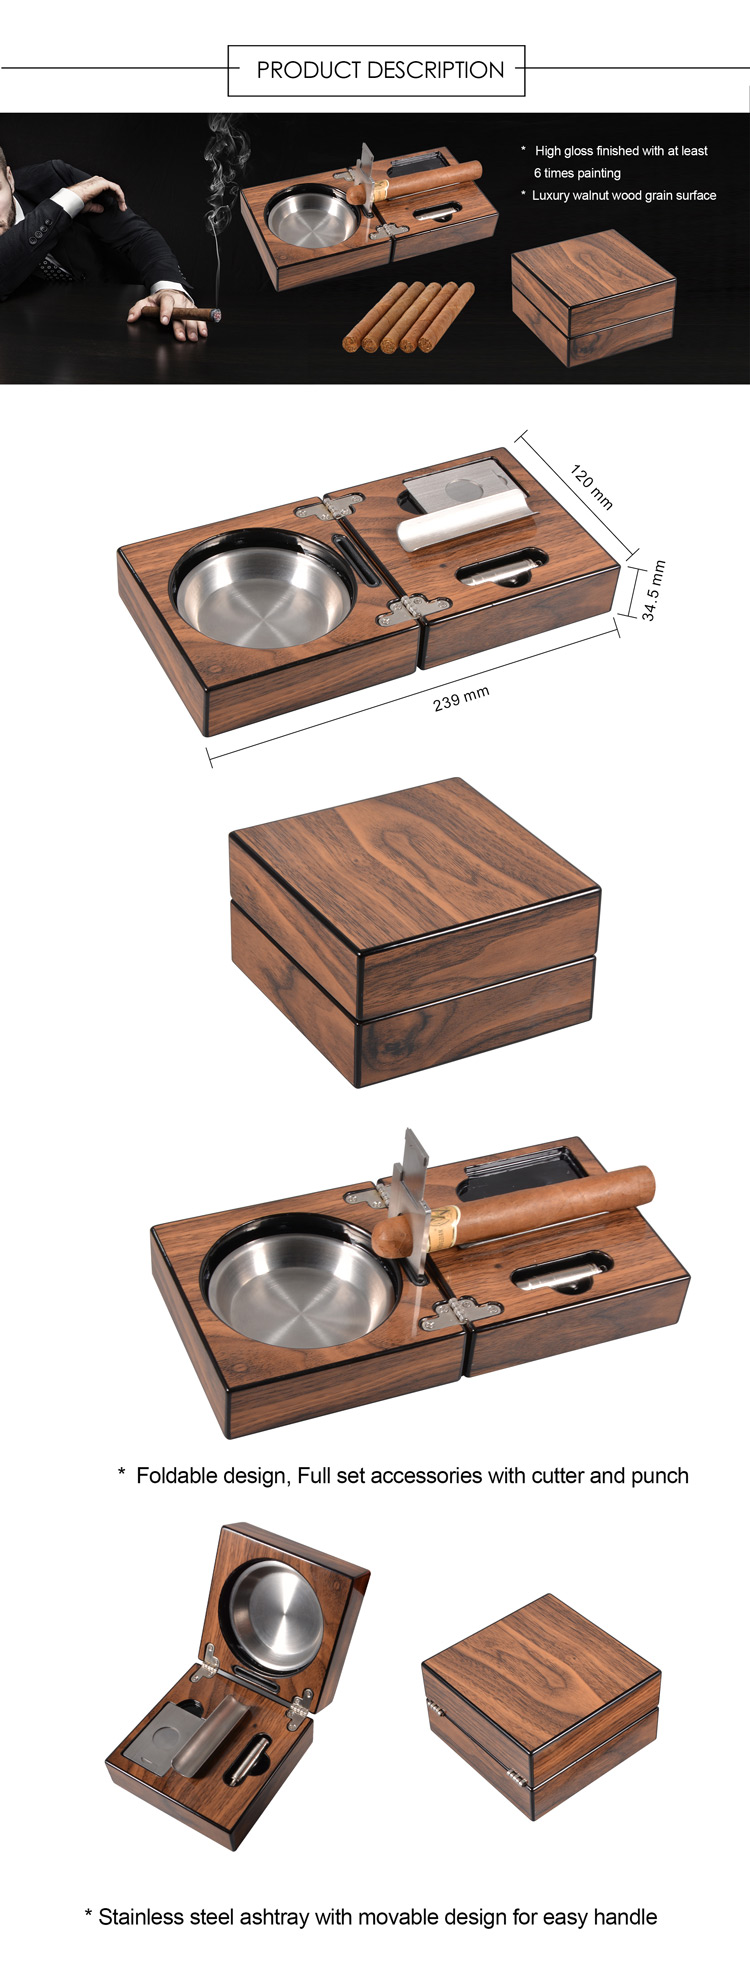 Wholesale 2019 New Products ash tray Windproof Function cigar ashtrays amazon 3